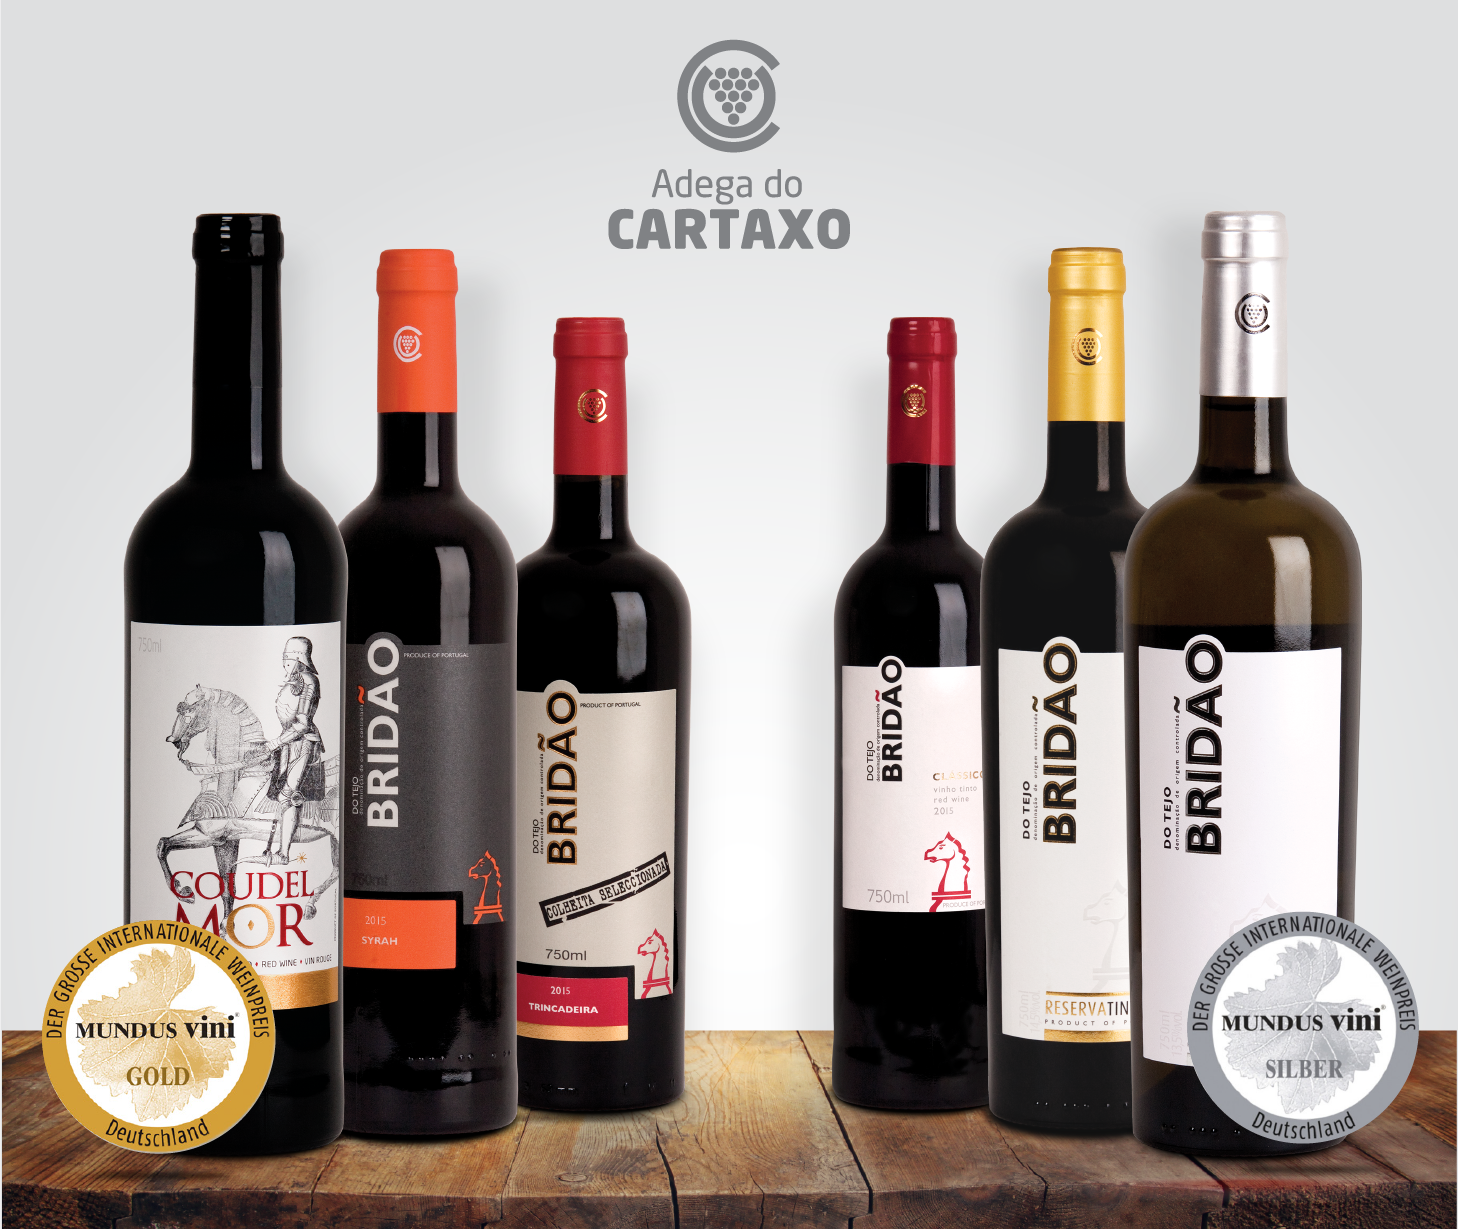 Mundus Vini Contest awards 6 wines from Adega do Cartaxo